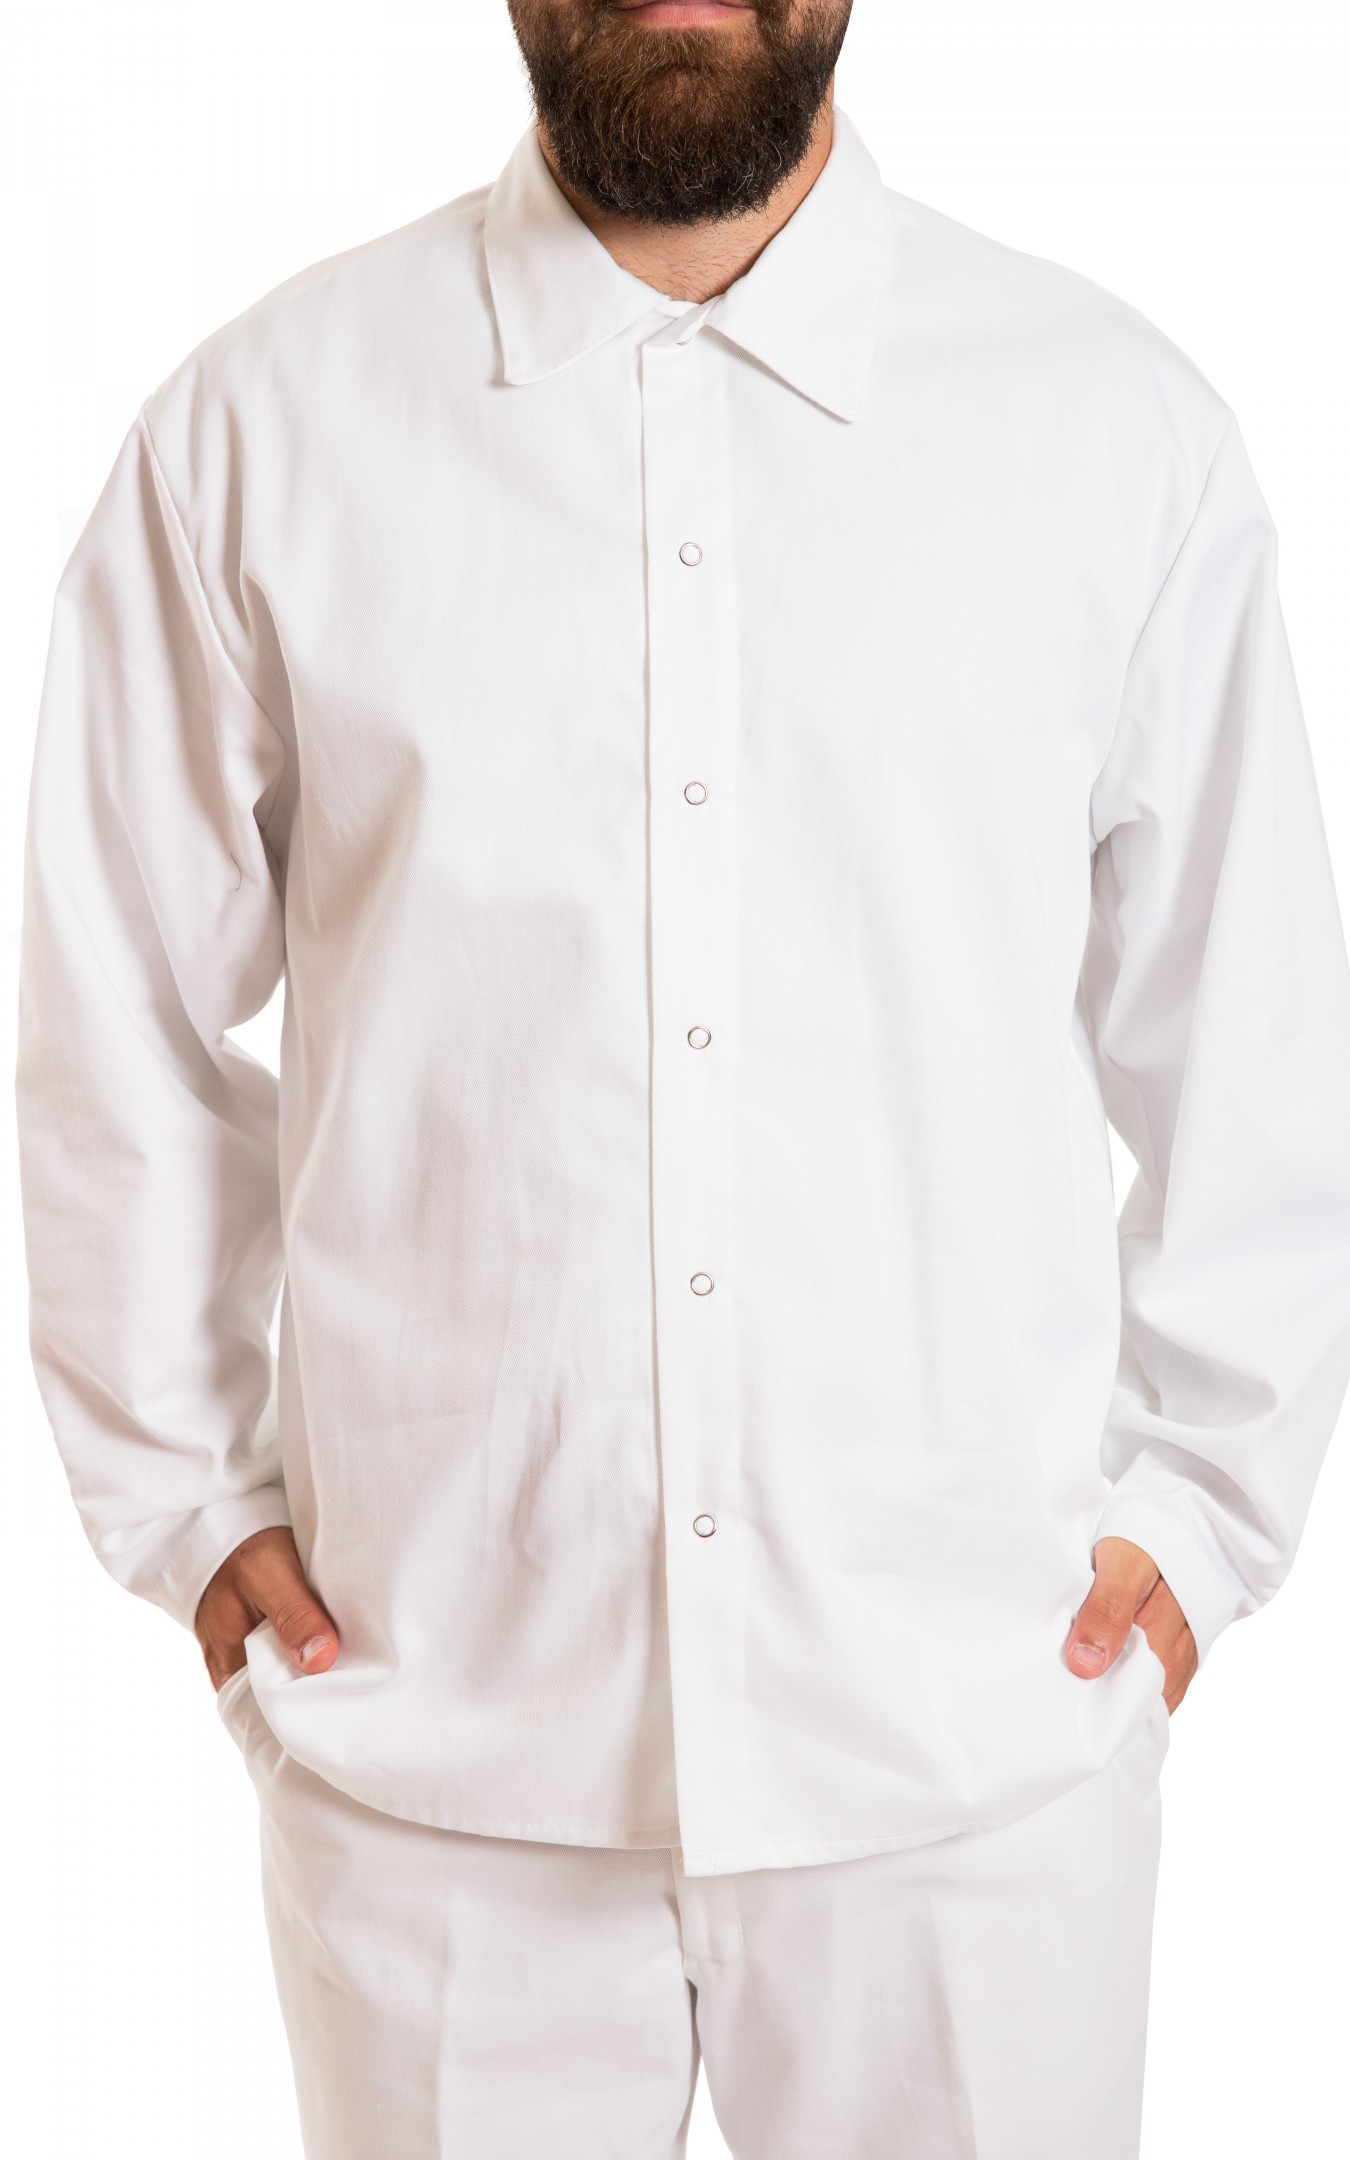 Long sleeve shirt , no pocket, gripper closure - LH Workwear